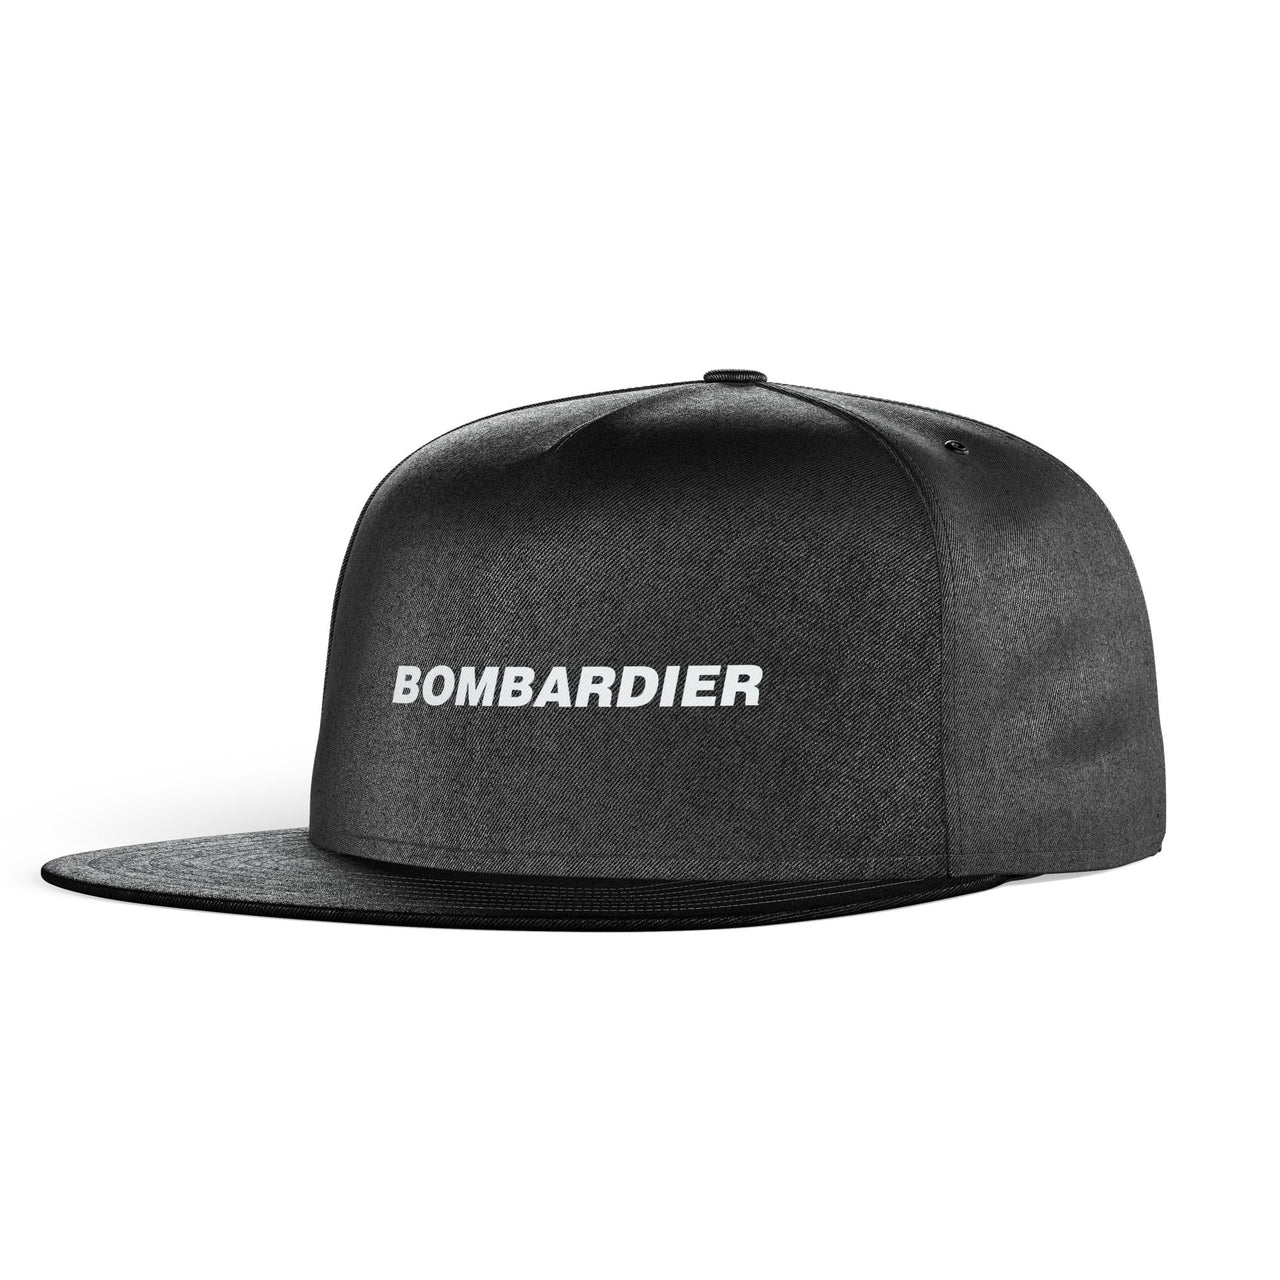 Bombardier & Text Designed Snapback Caps & Hats